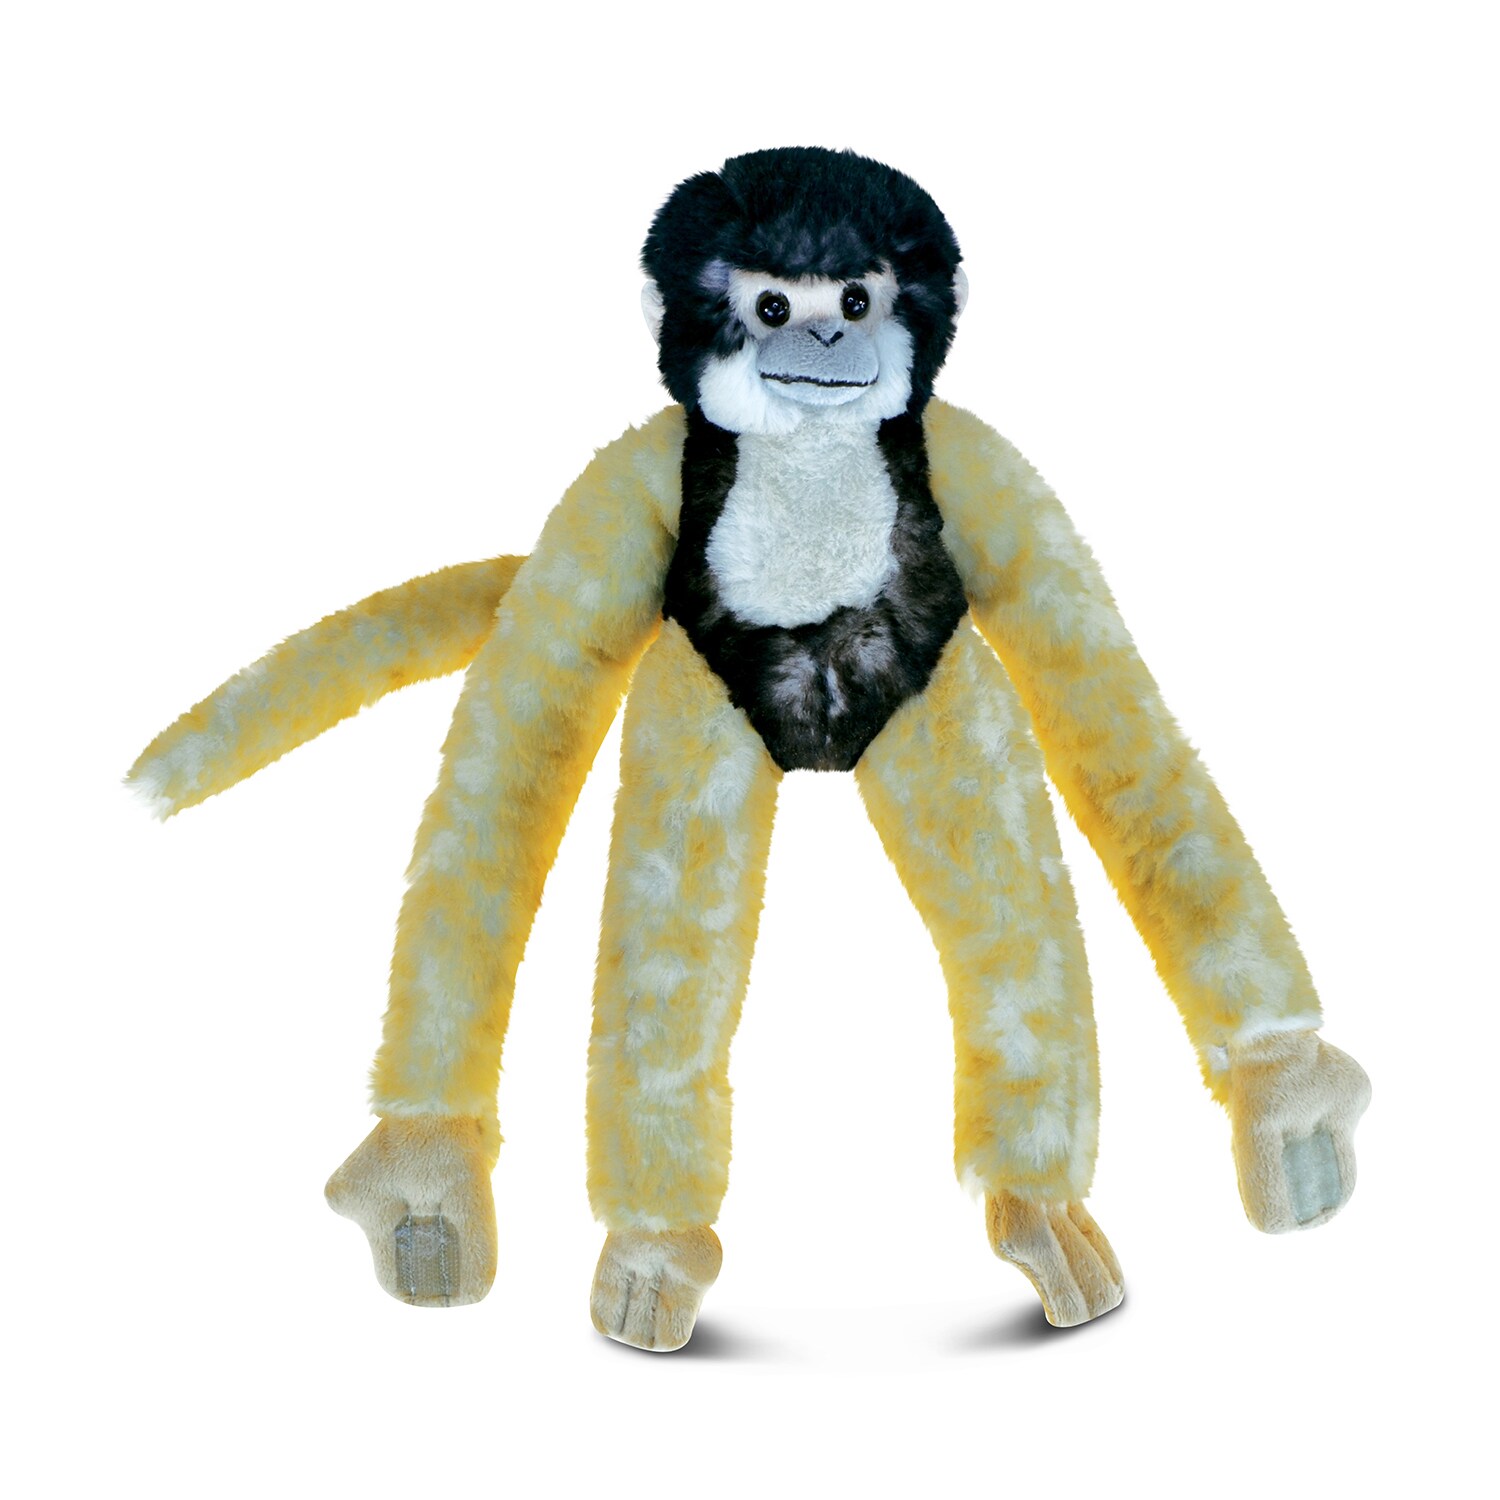 long arm stuffed monkey